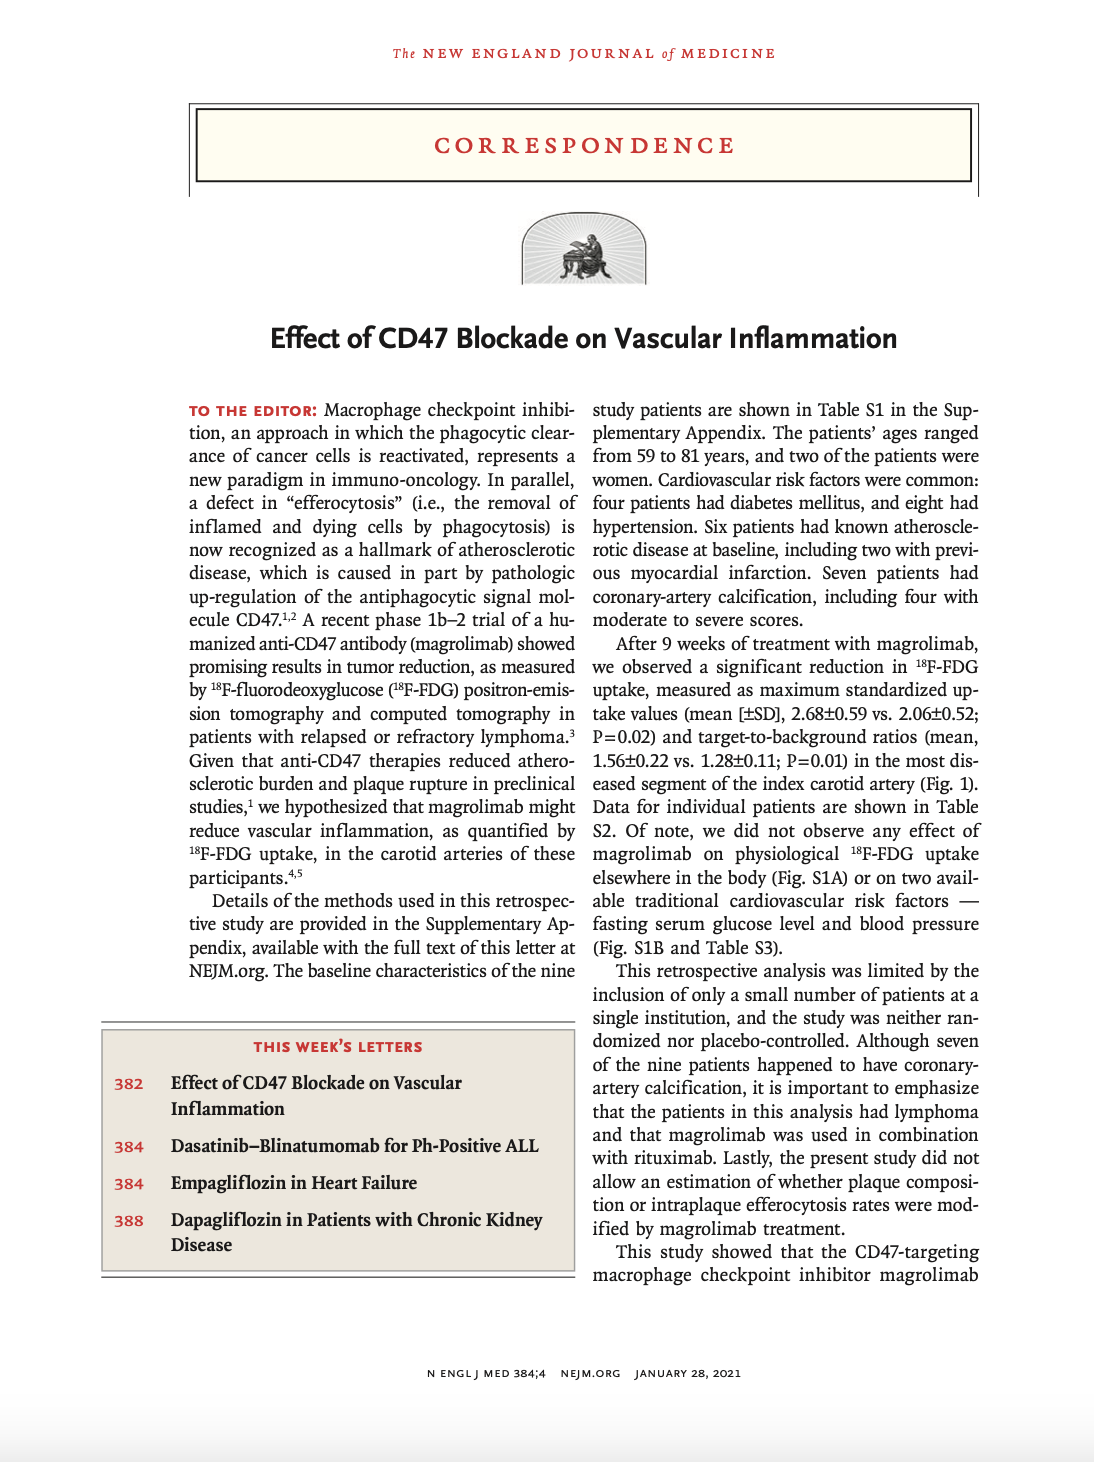 Effect of CD47 Blockade on Vascular Inflammation